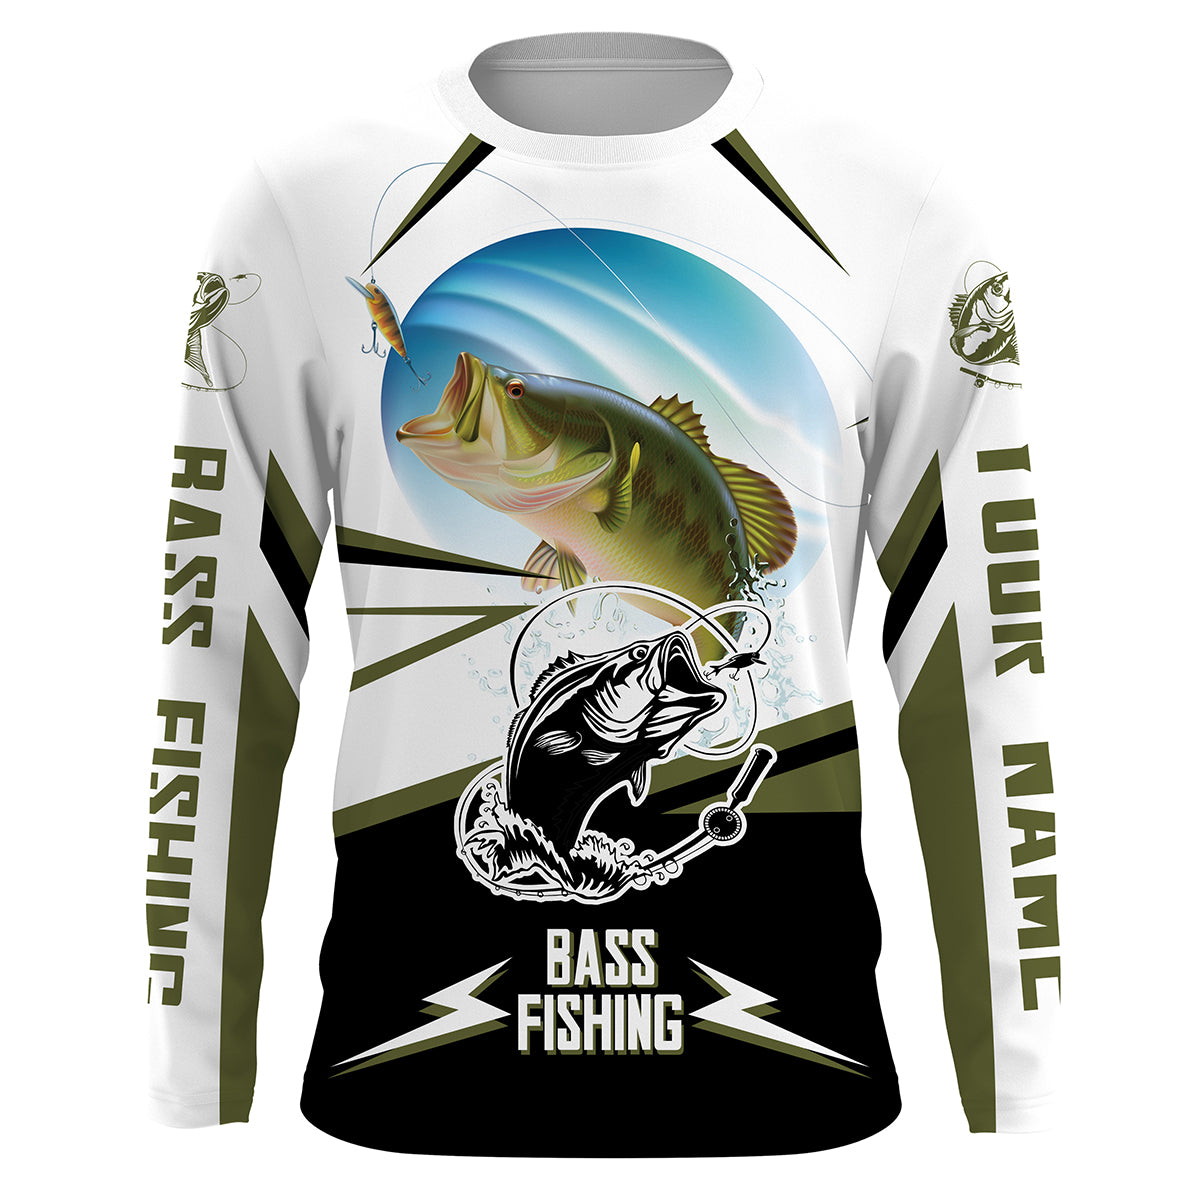 Bass Fishing shirt UV protection quick dry customize name